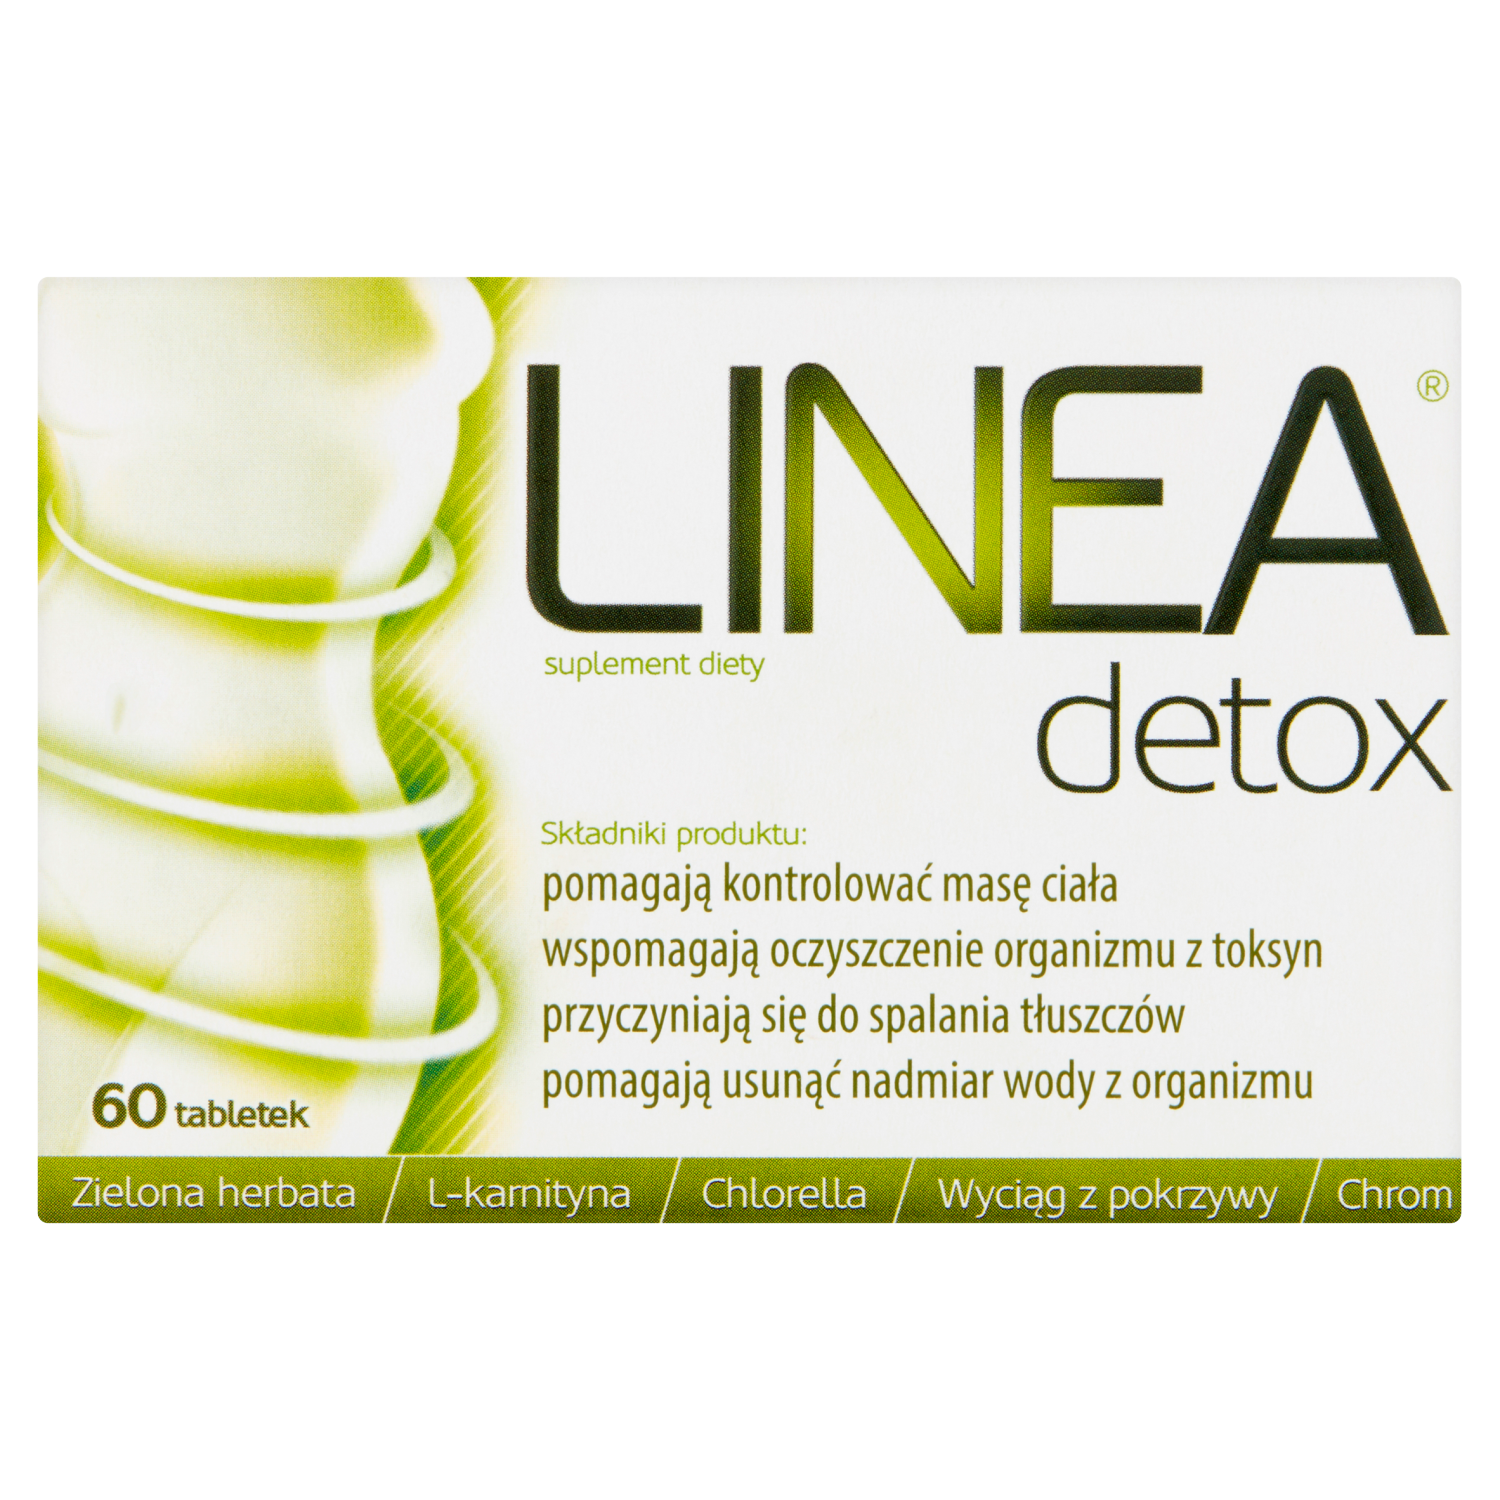 vita miner prenatal биологически активная добавка 60 таблеток 1 упаковка Linea Detox биологически активная добавка, 60 таблеток/1 упаковка